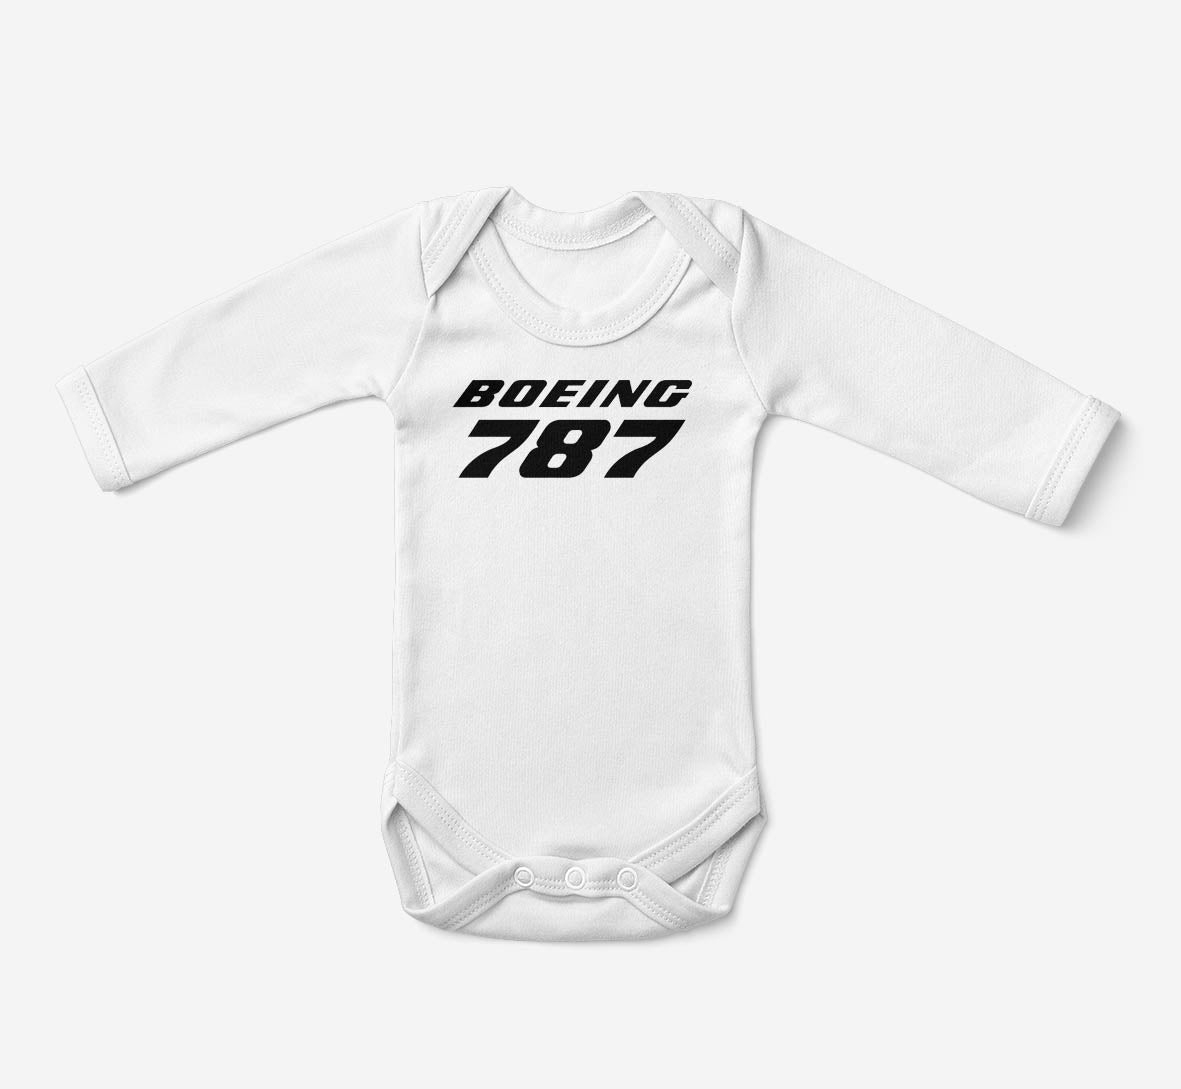 Boeing 787 & Text Designed Baby Bodysuits